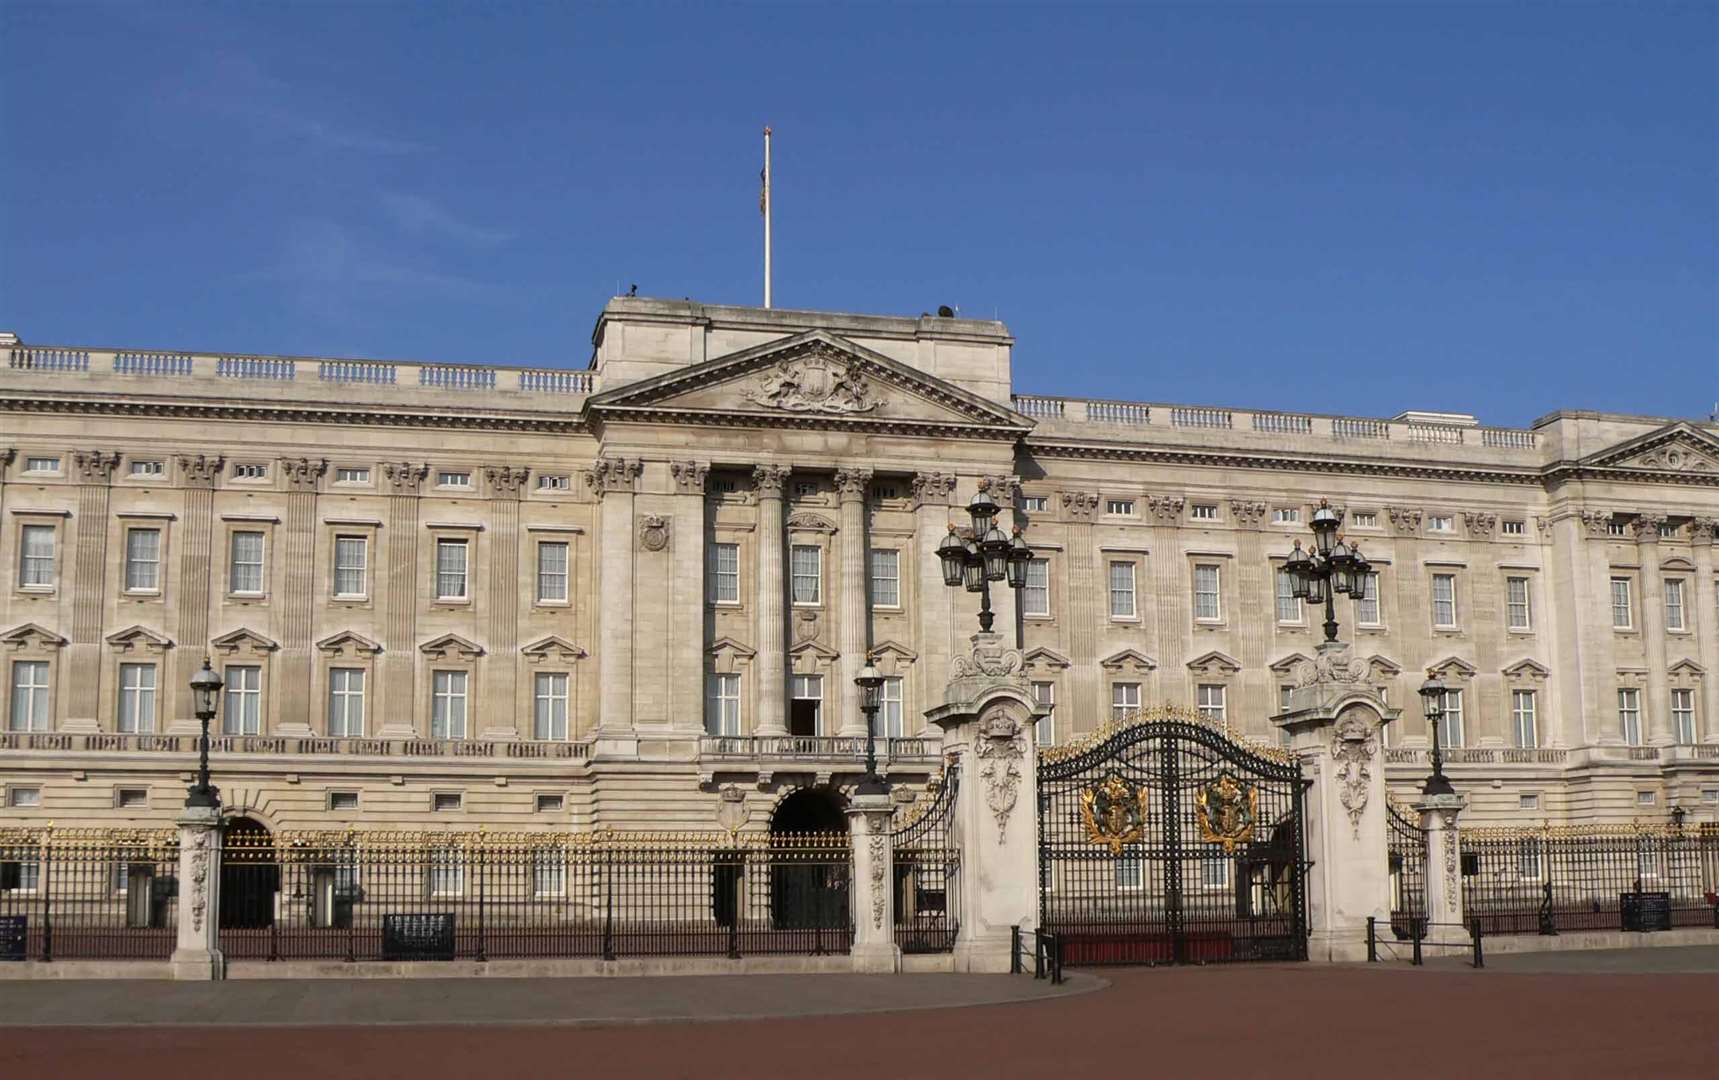 Paul said working at Buckingham Palace was "too regimental"